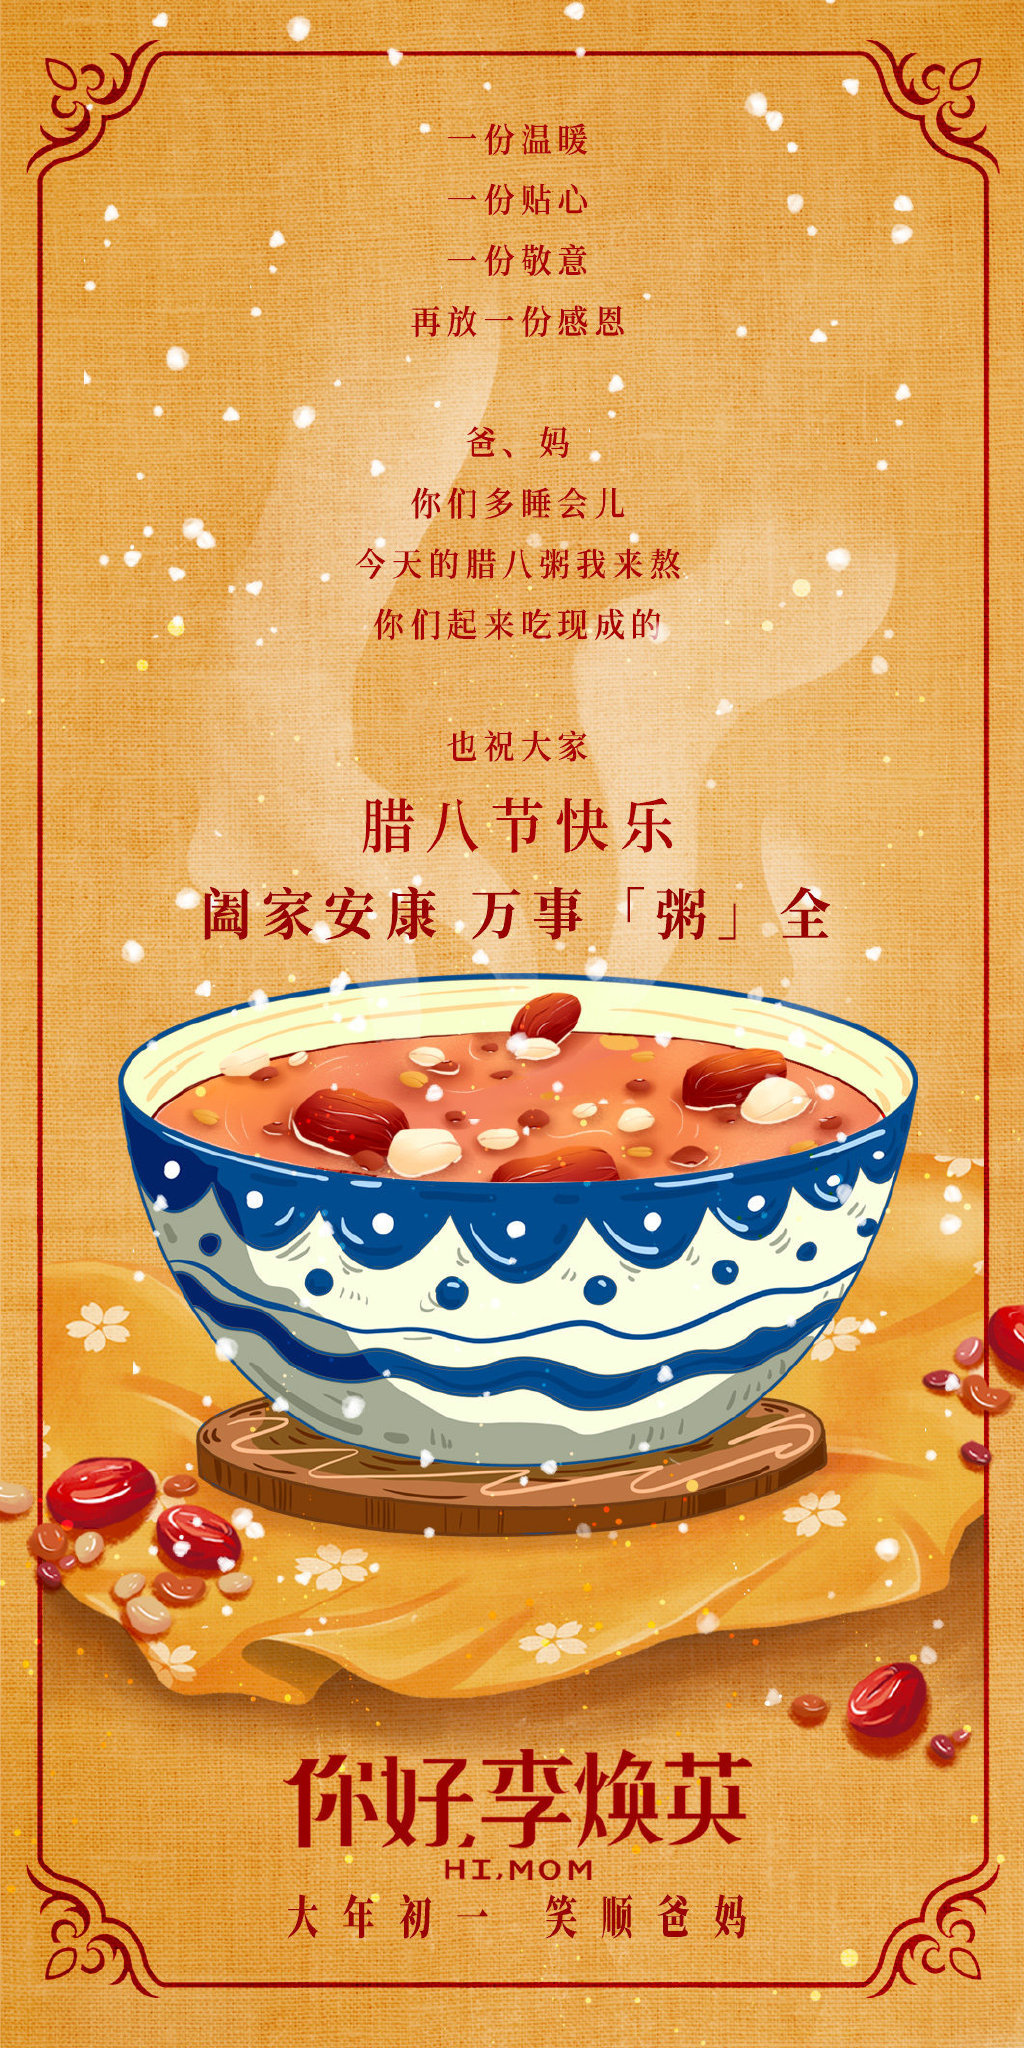 Ni Hao, Li Huan Ying for apple download